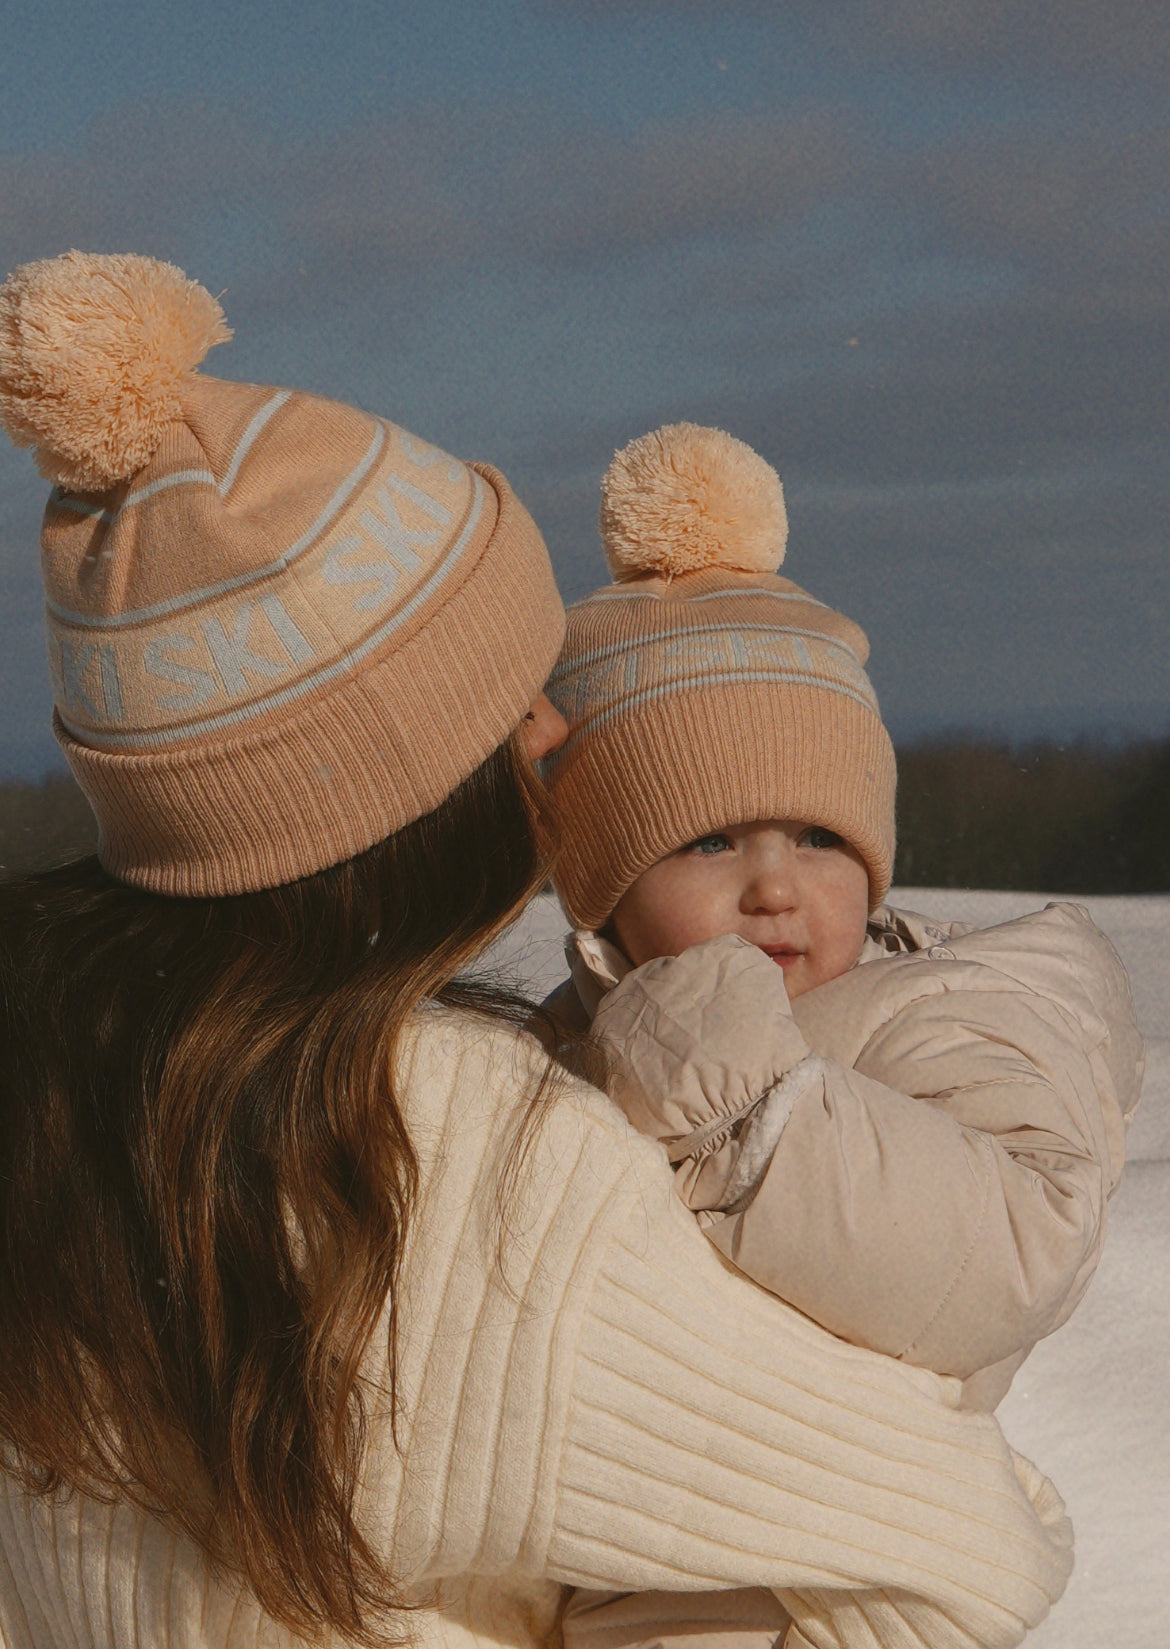 Child / toddler Apres ski beanie, Retro ski wear, vintage European ski knit hat, winter beanie, cream & blue beanie with pom pom fashion ski beanie. Mommy & me ski fashion 